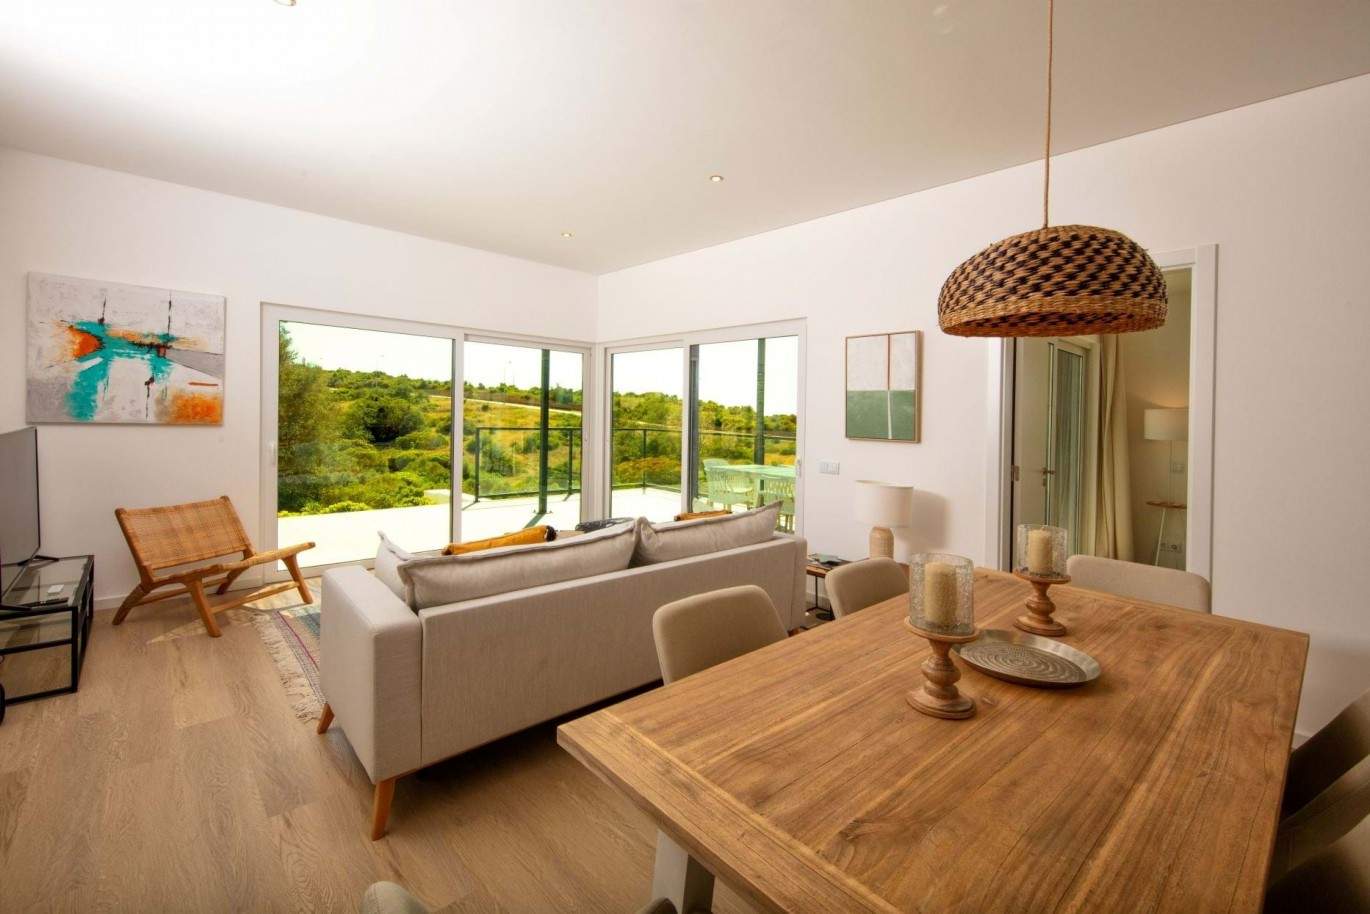 2+1 bedroom villa in resort, for sale in Carvoeiro, Algarve_204863